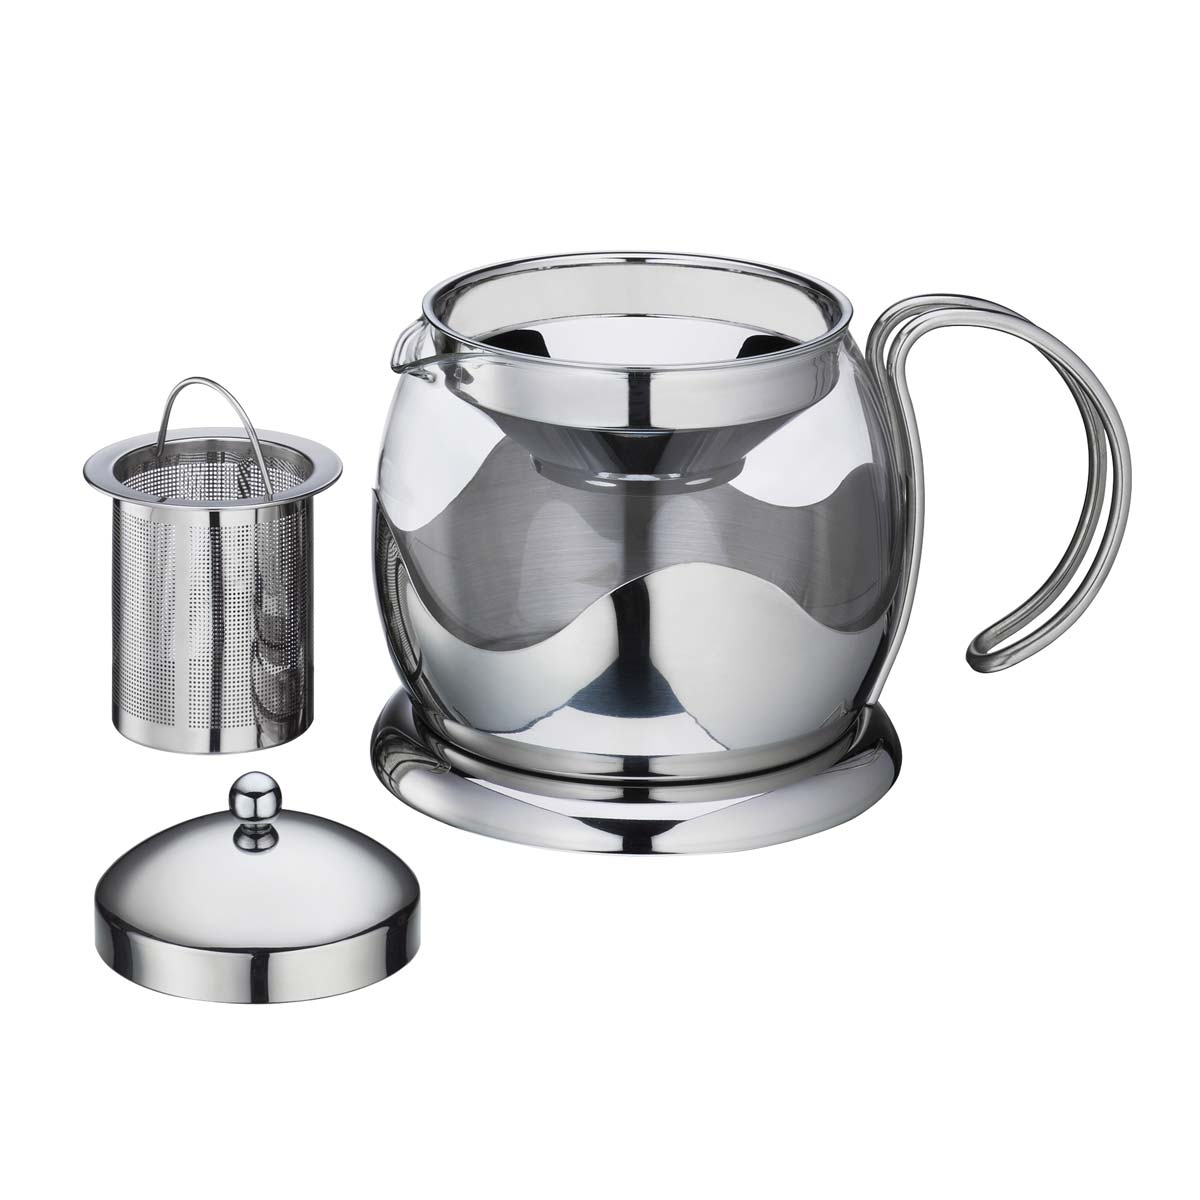 Küchenprofi TEA Teekanne EARL GREY - Filter aus rostfreiem Edelstahl 1,25 L